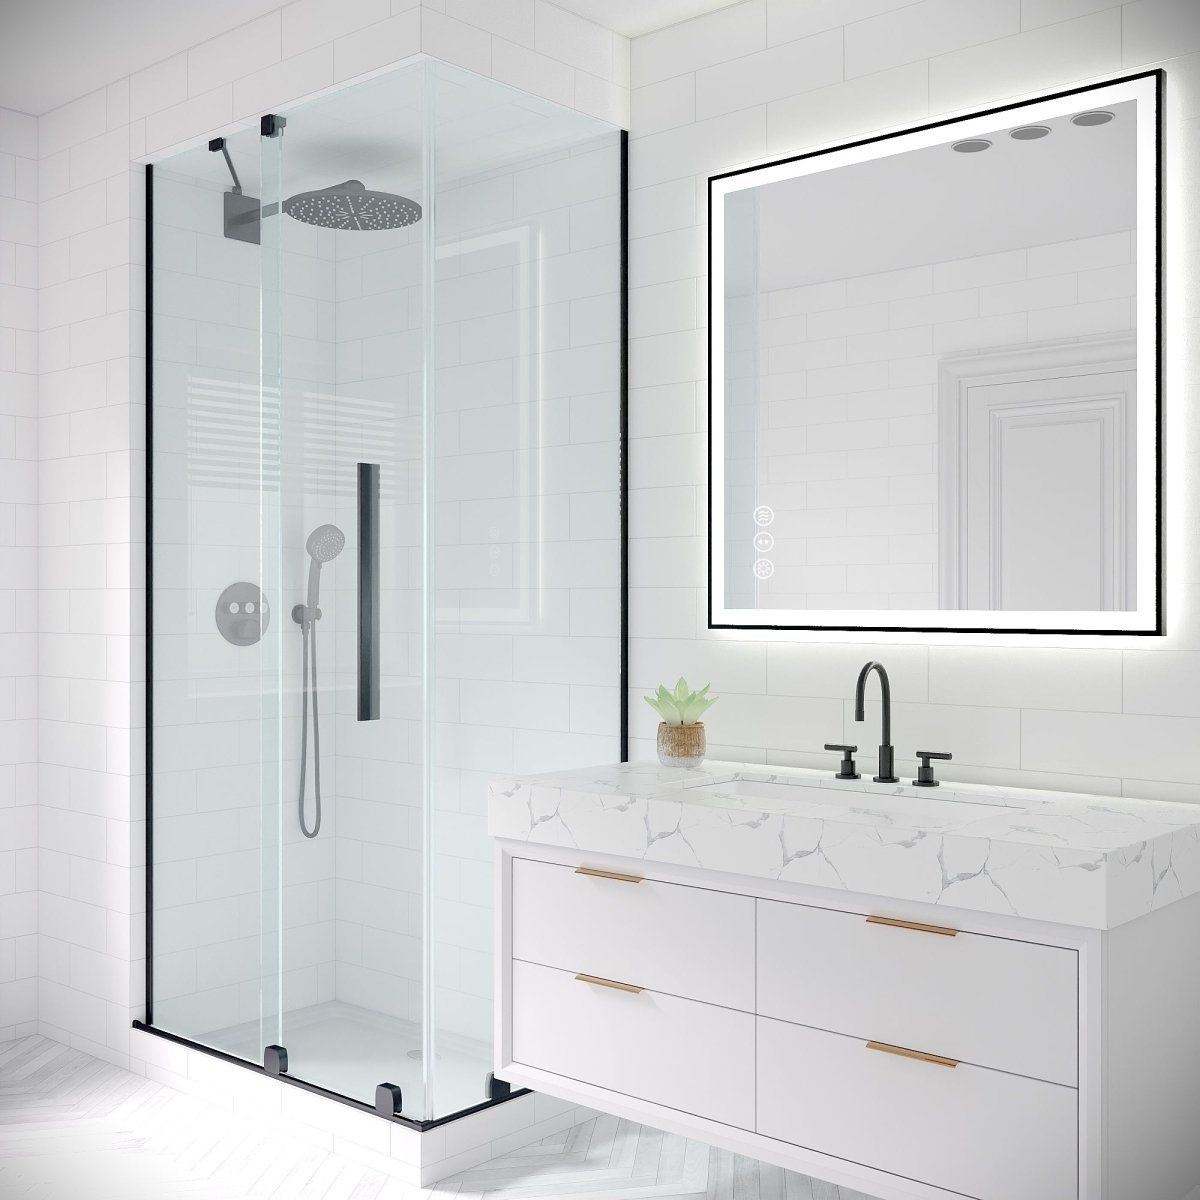 Apex-Noir 36"x36" Framed LED Lighted Bathroom Mirror